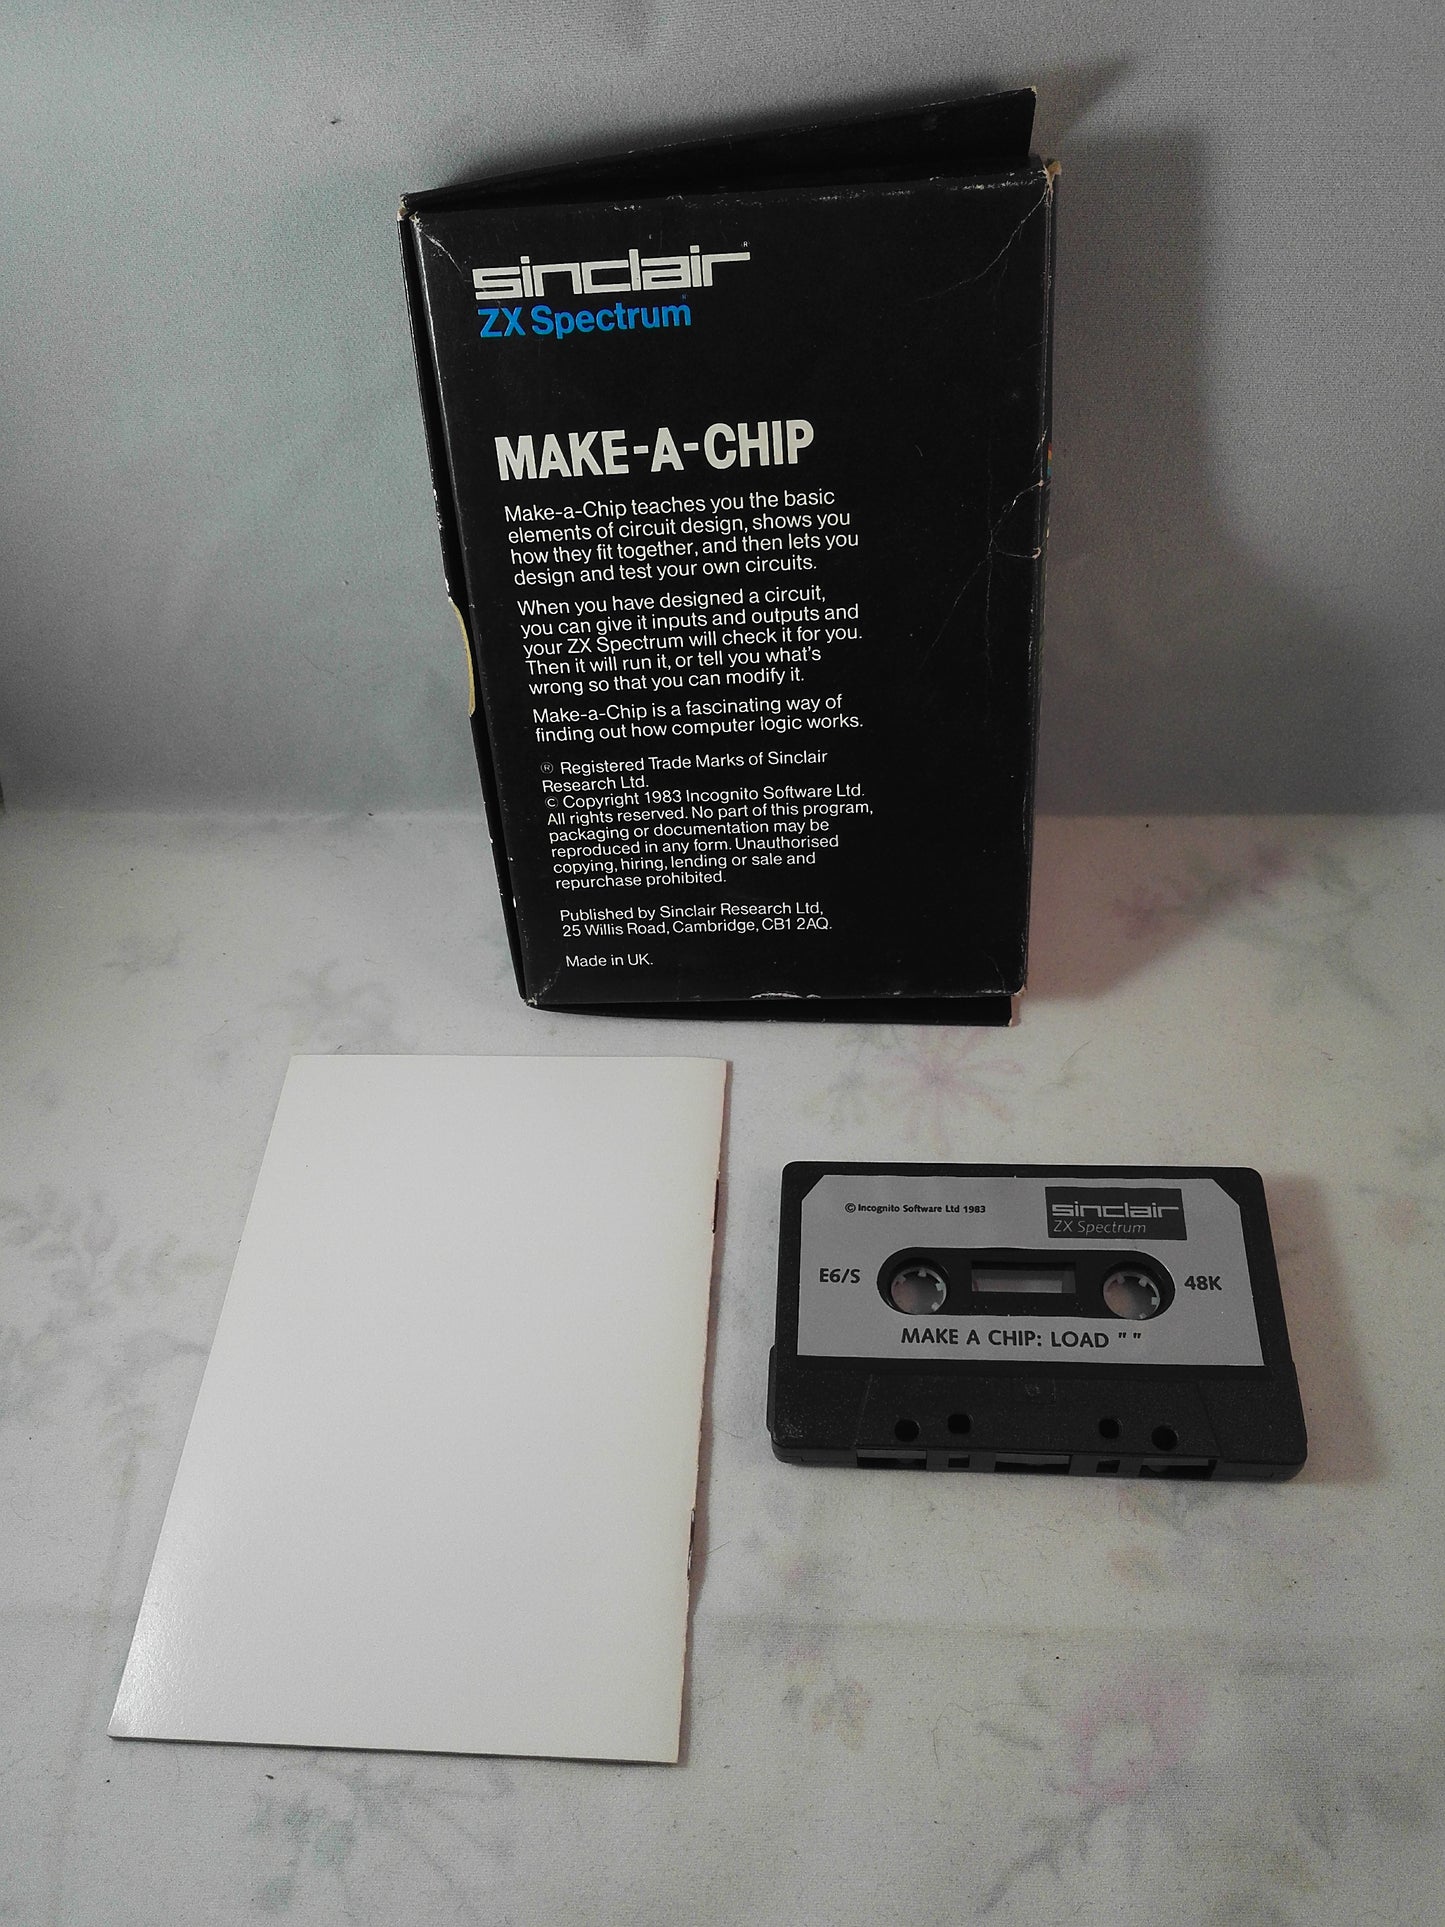 Make-A-Chip (Sinclair ZX Spectrum) game